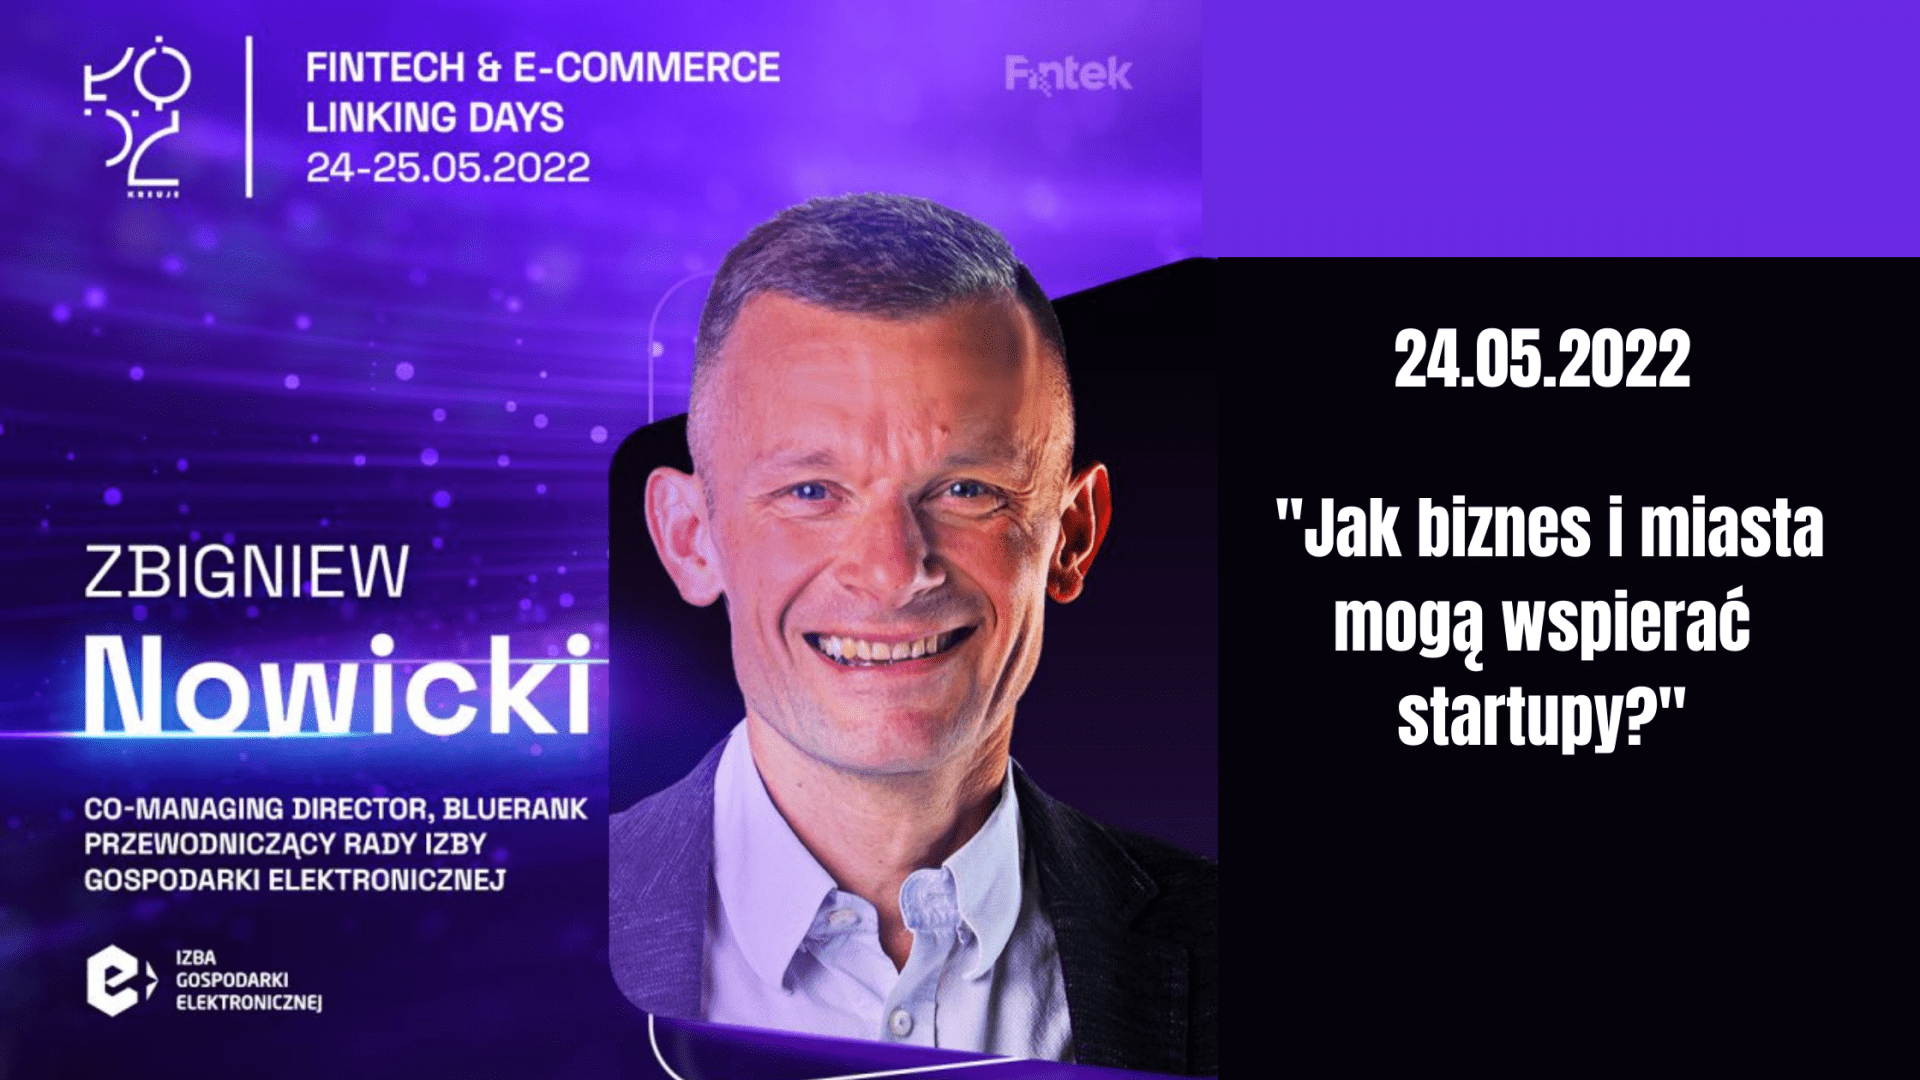 Fintech & e-commerce linking days 2022 Łódź